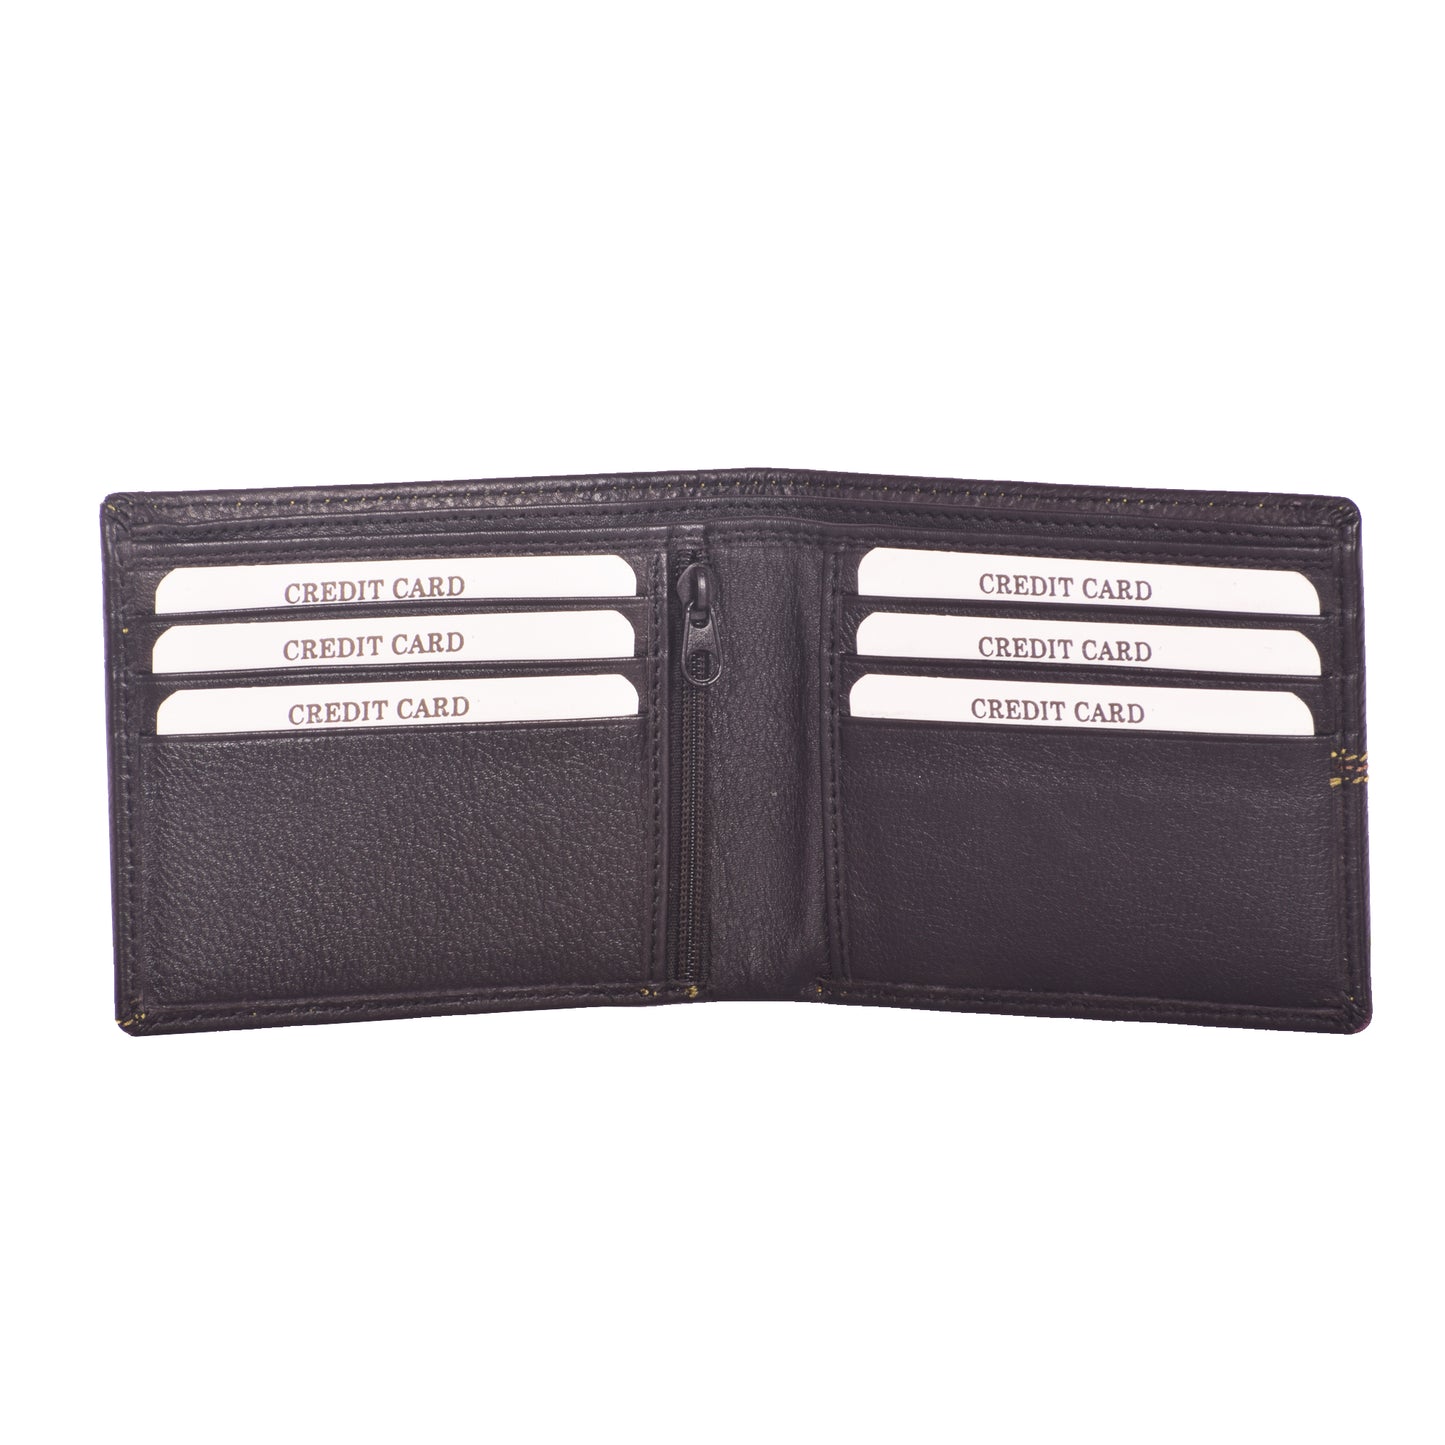 Premium Quality Genuine Leather Wallet for Men | RFID Wallet | Gift for Men